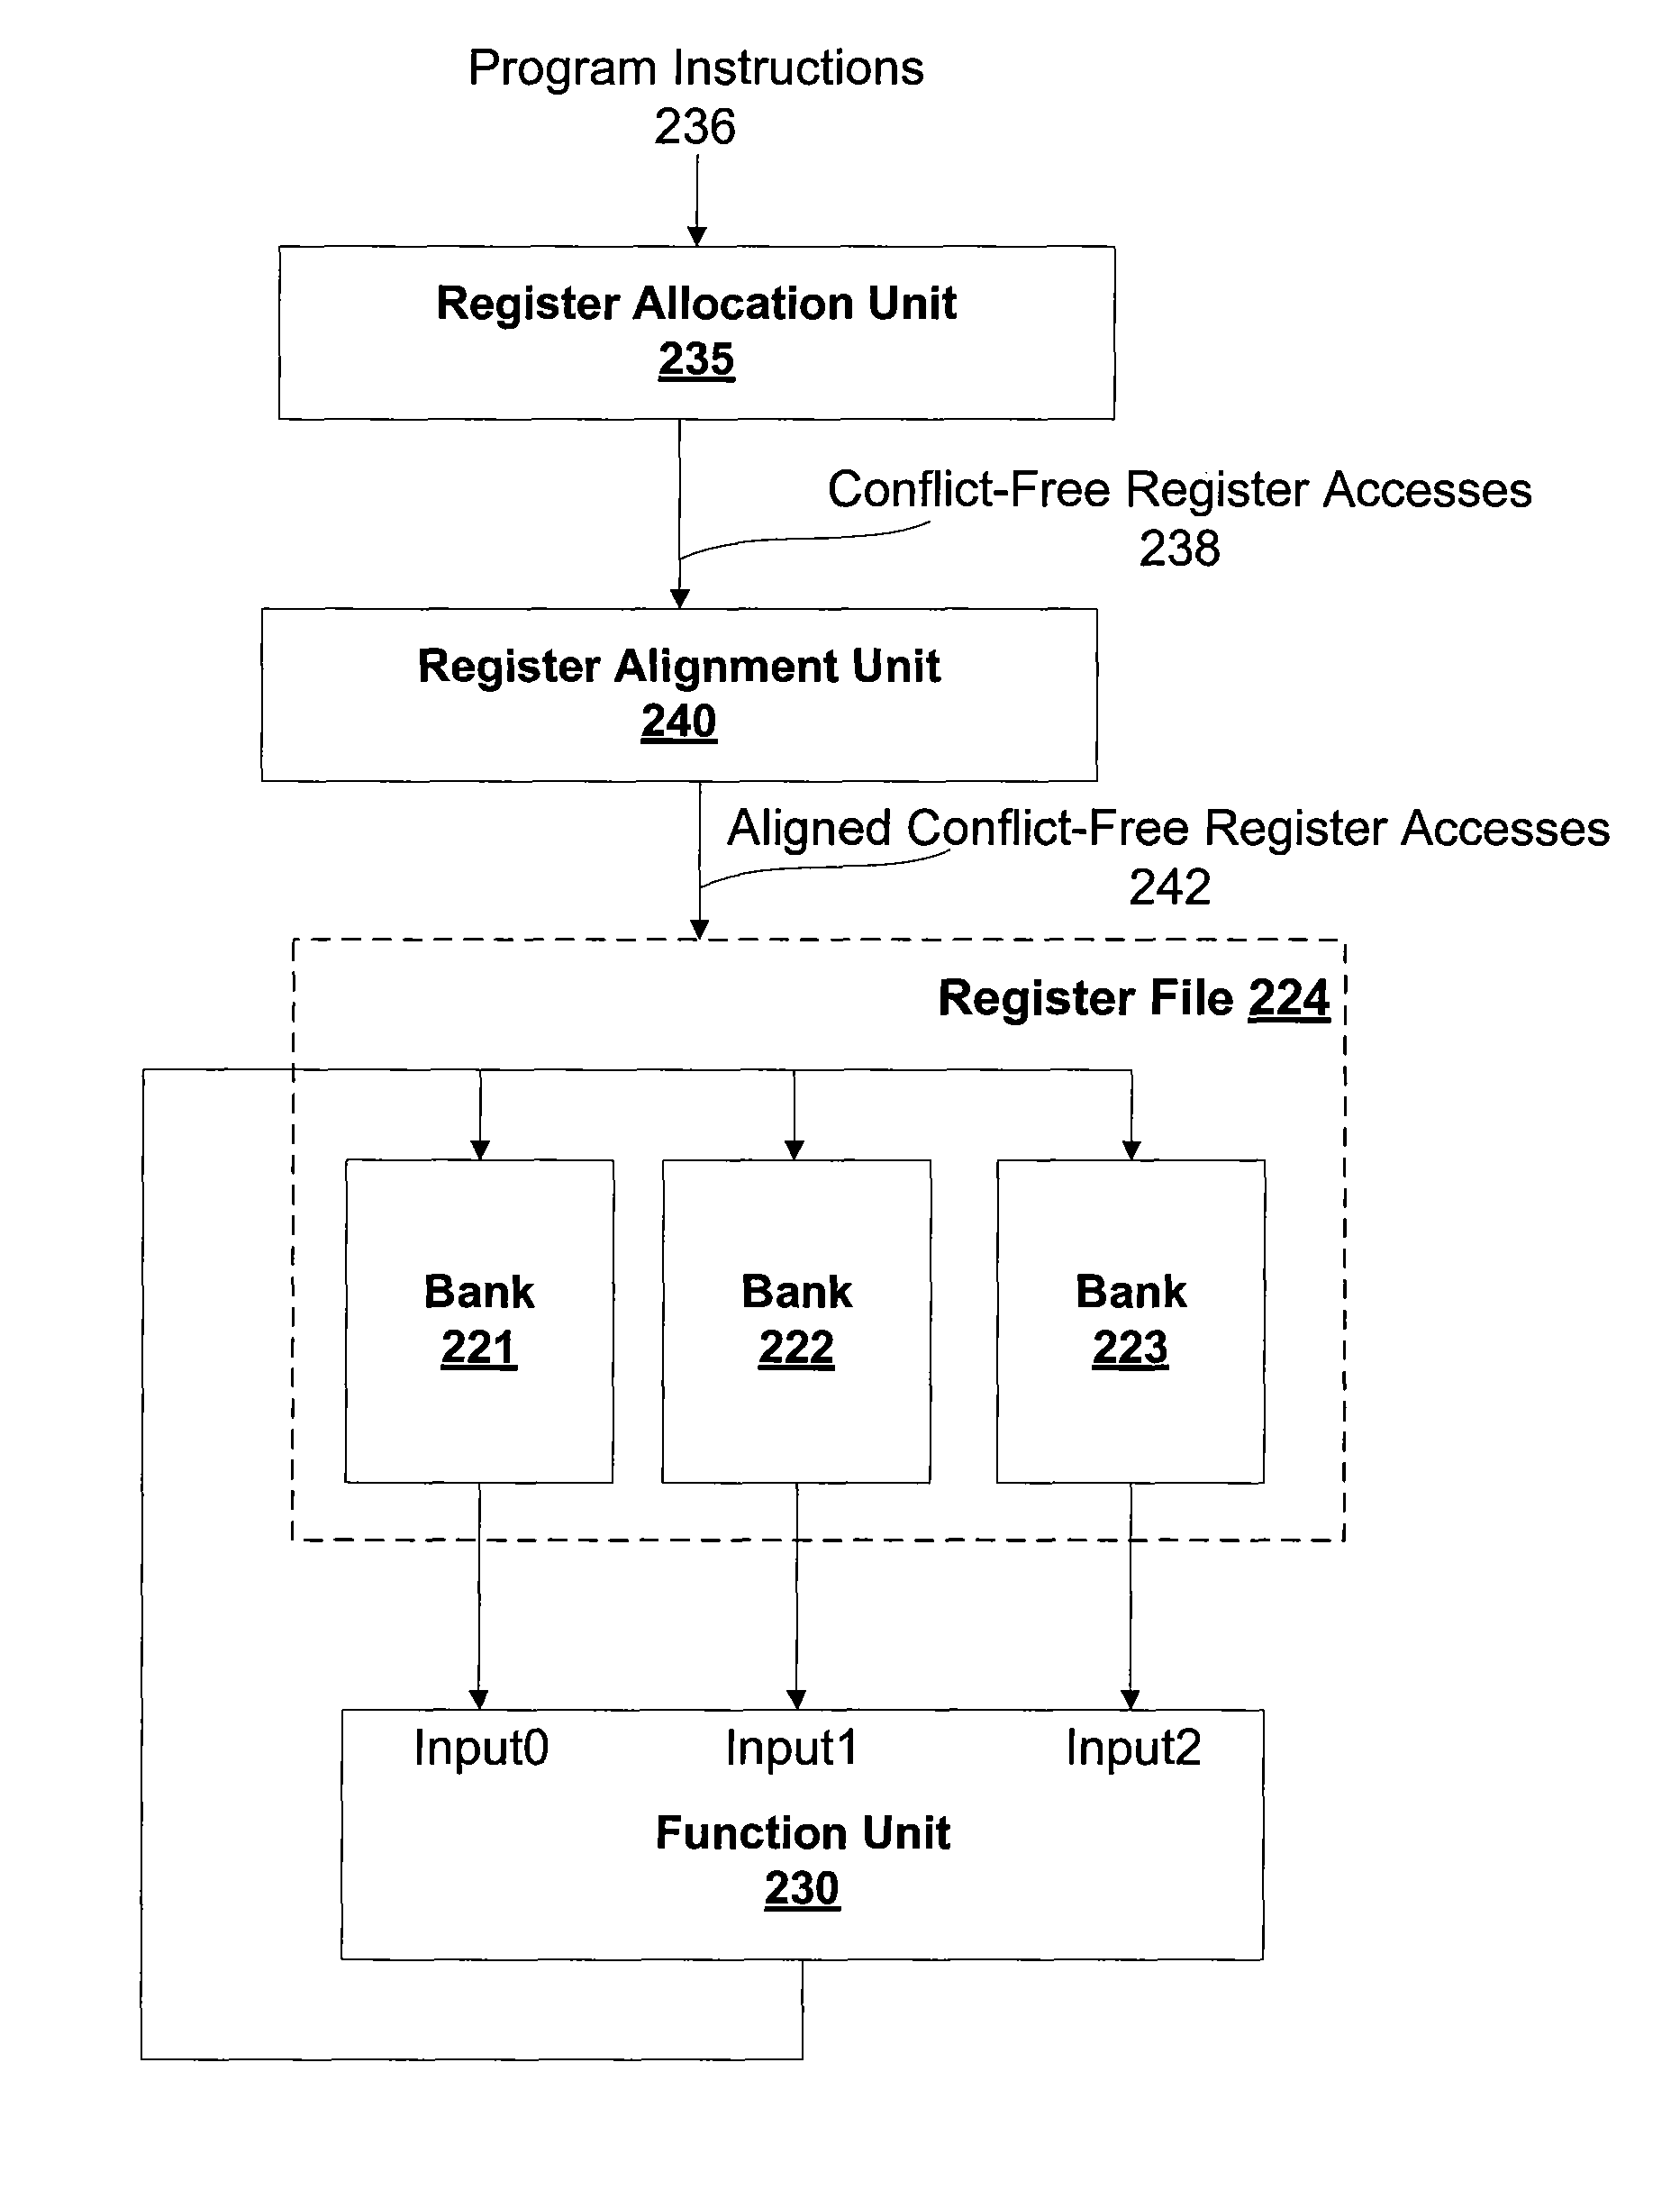 Conflict-free register allocation